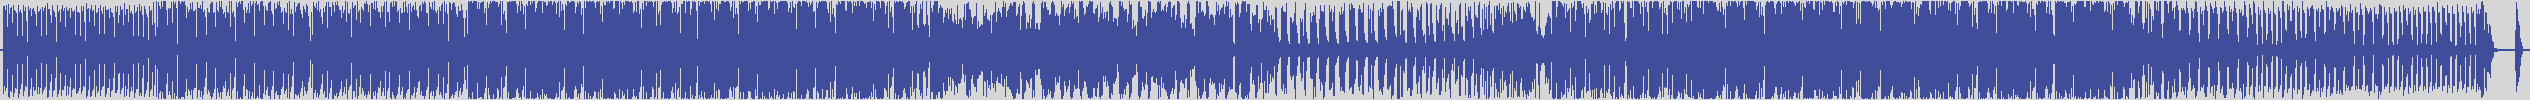 nf_boyz_records [NFY016] Sonny Boro - Talk Me [Tech House Edit] audio wave form